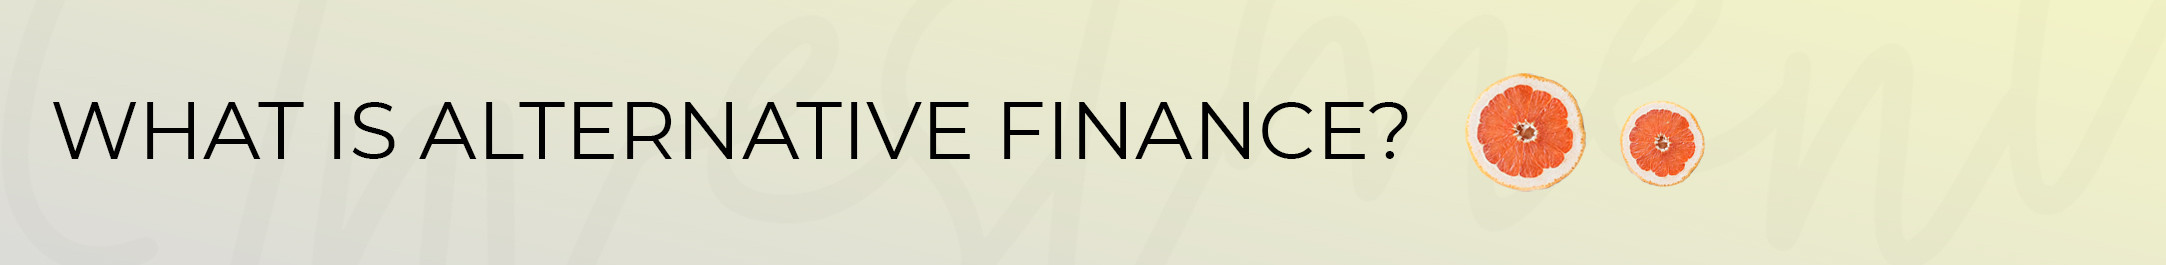 What is Alternative Finance?